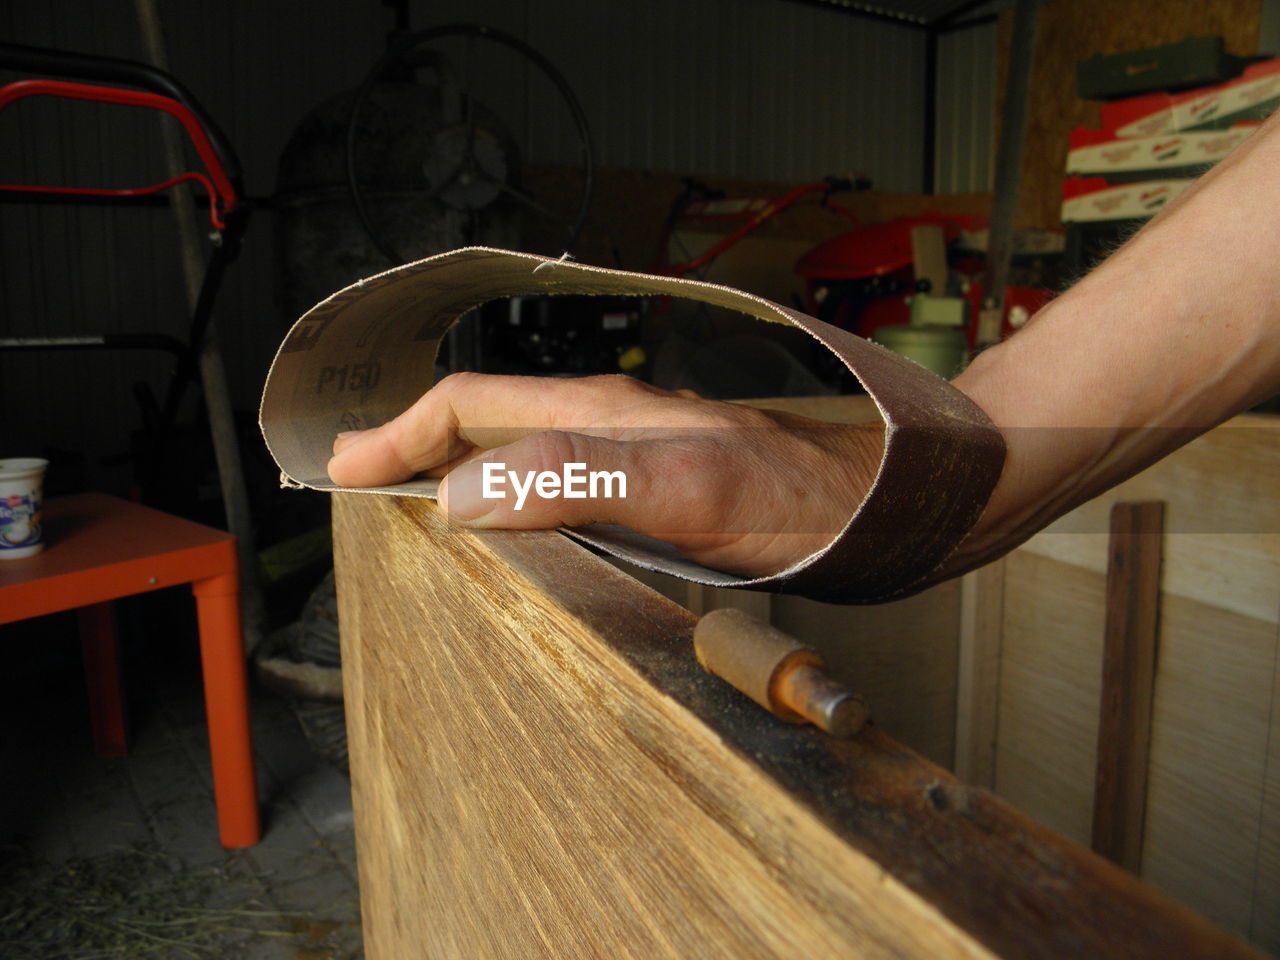 Cropped hand polishing wood